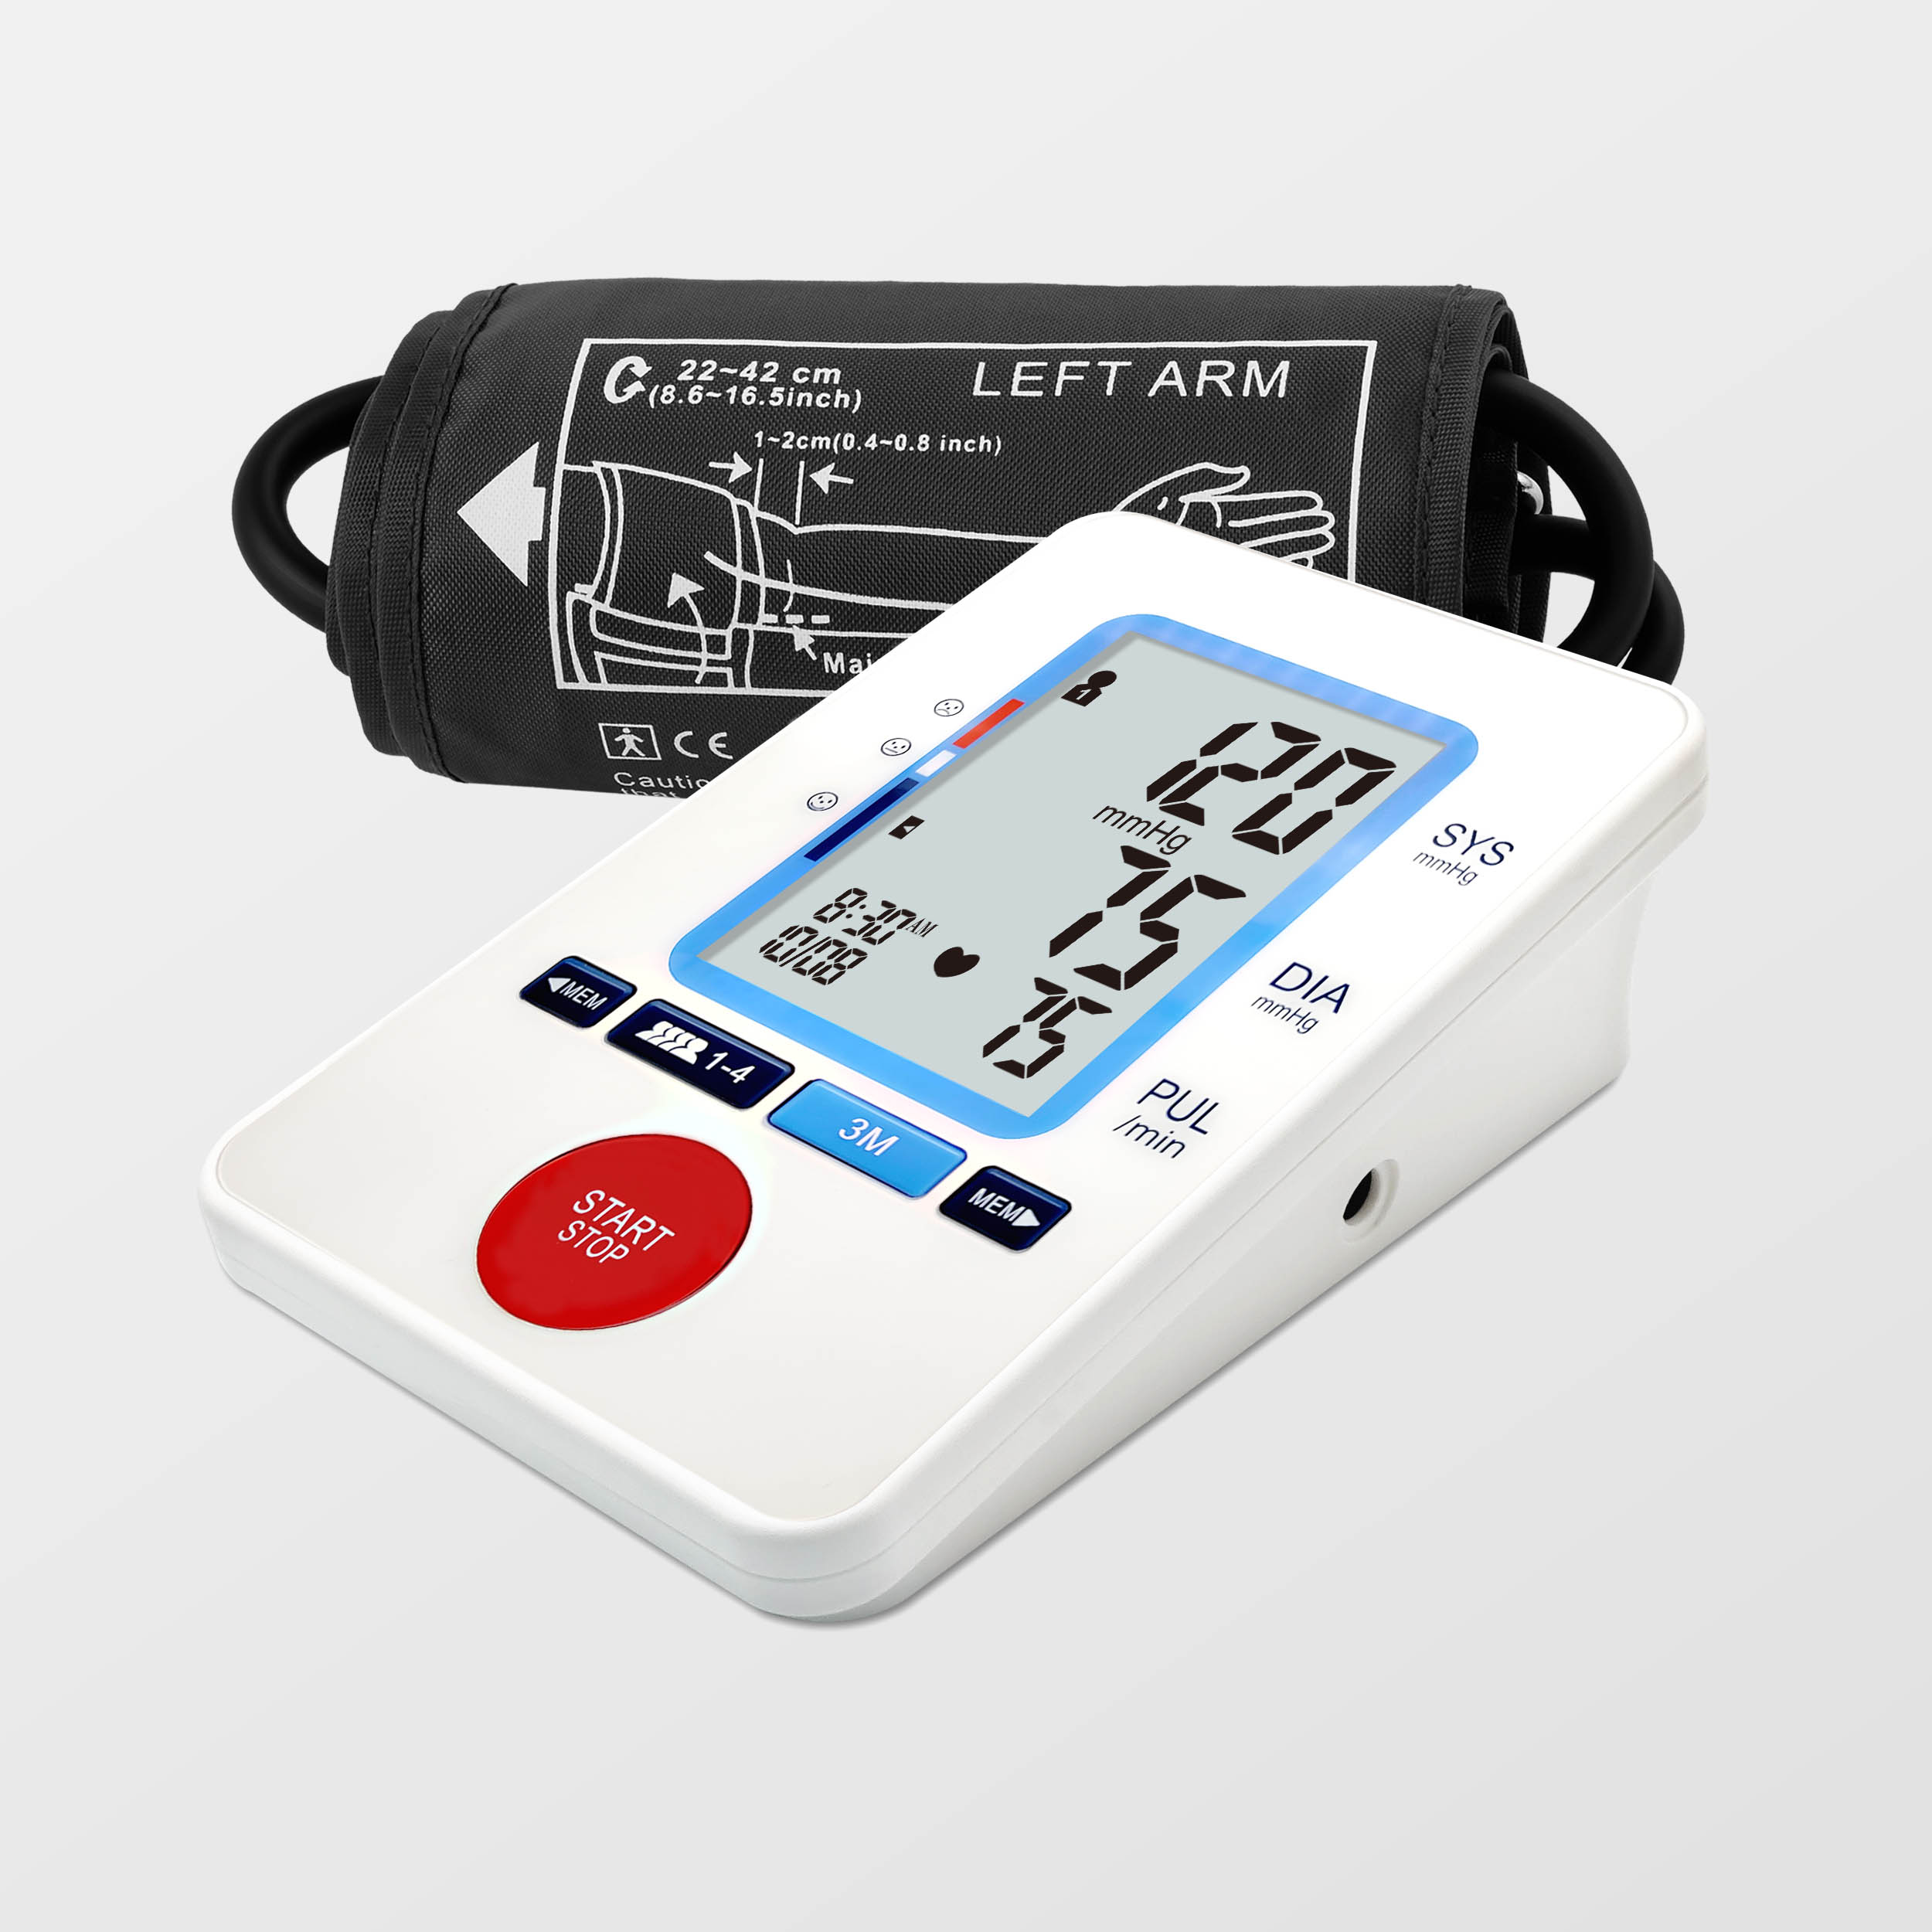 ROHS REACH Approvat Upper Arm Blood Pressure Monitor Digital Tensiometro Bluetooth